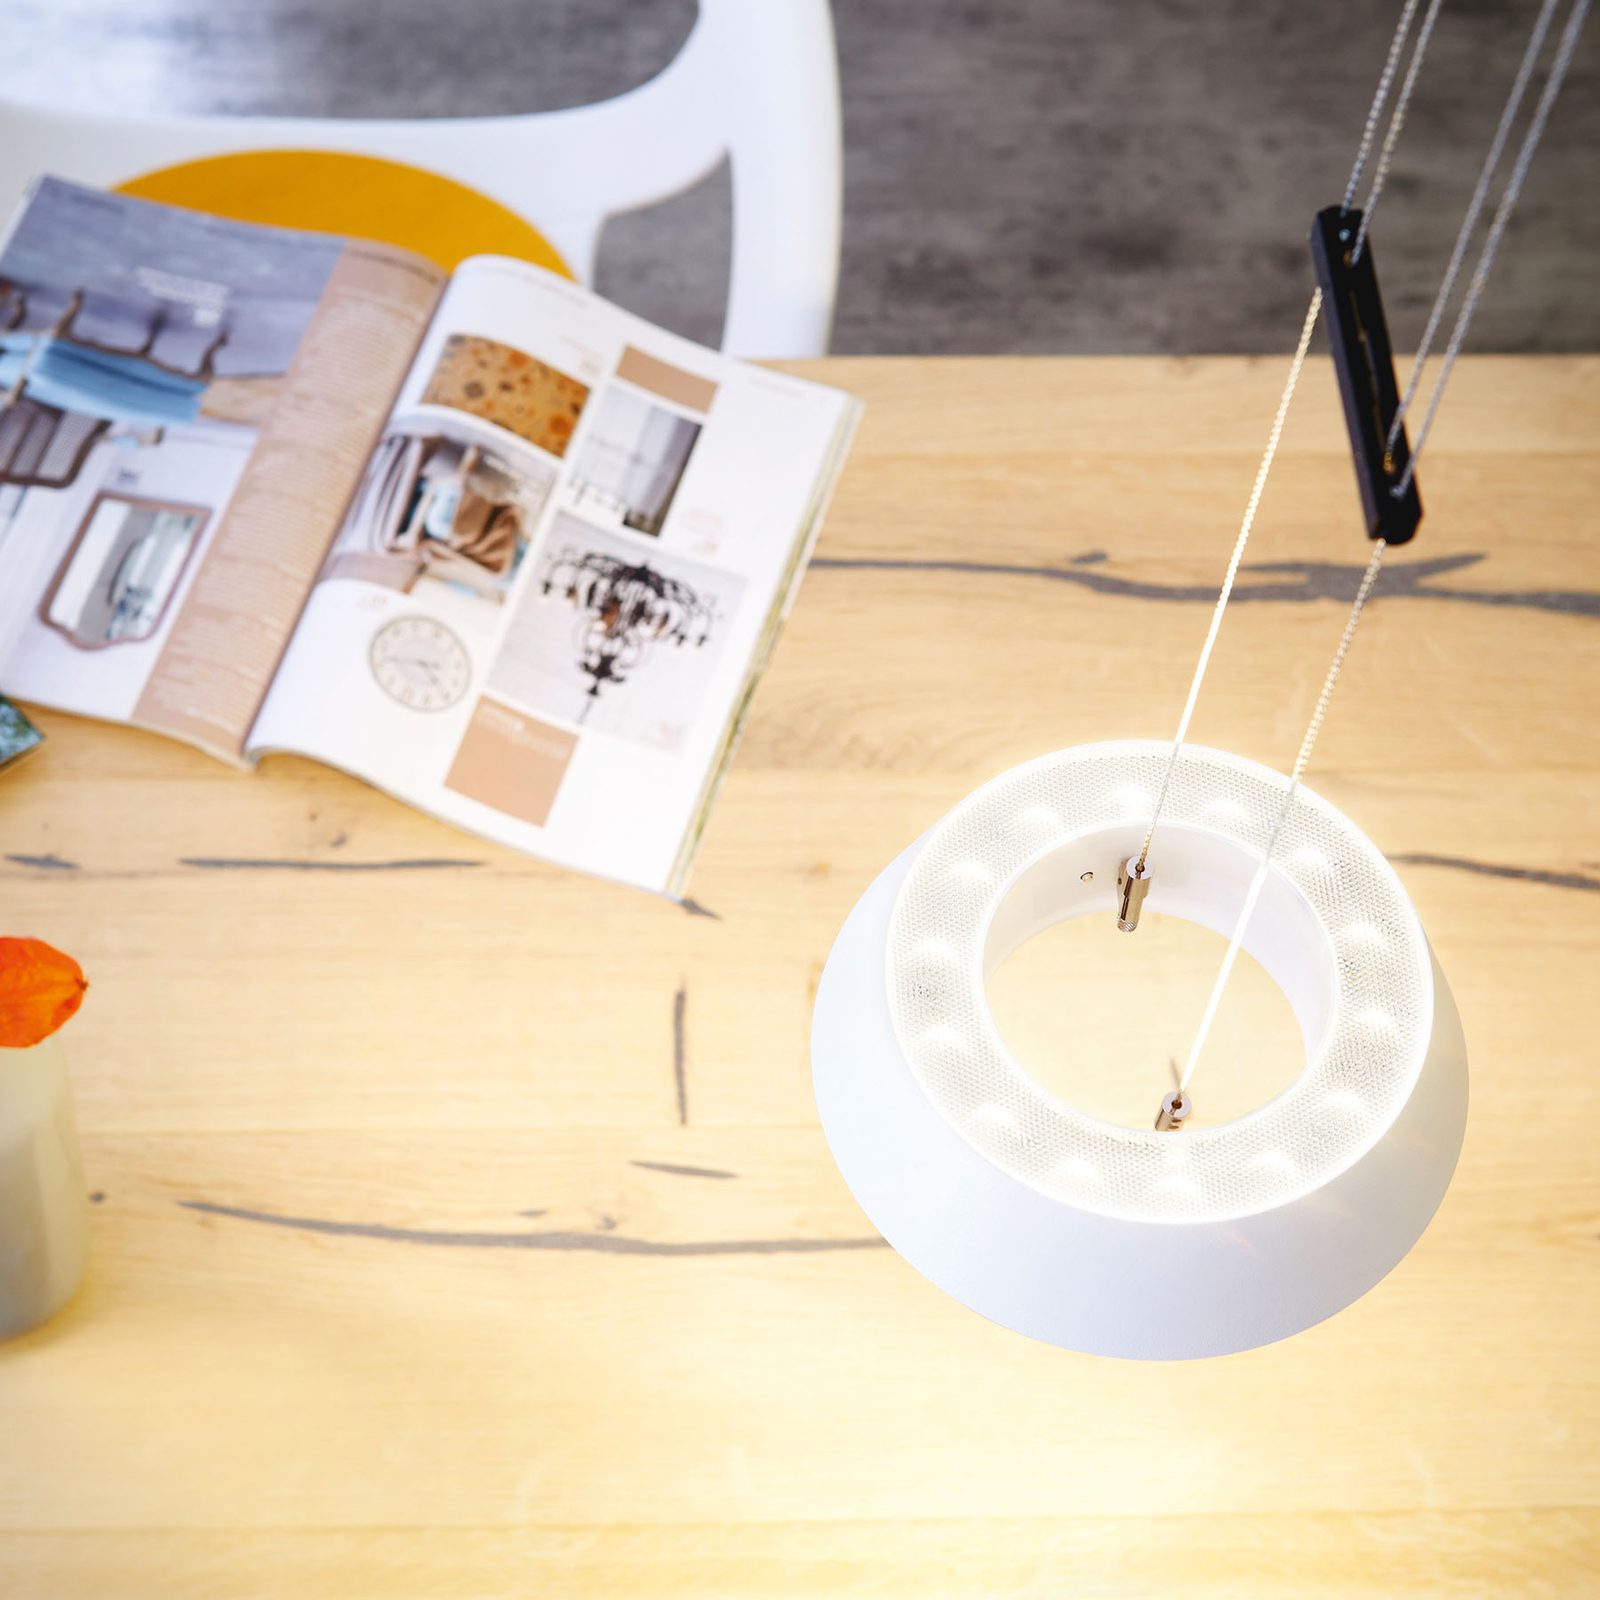 OLIGO Glance LED hanglamp 1-lamp wit mat